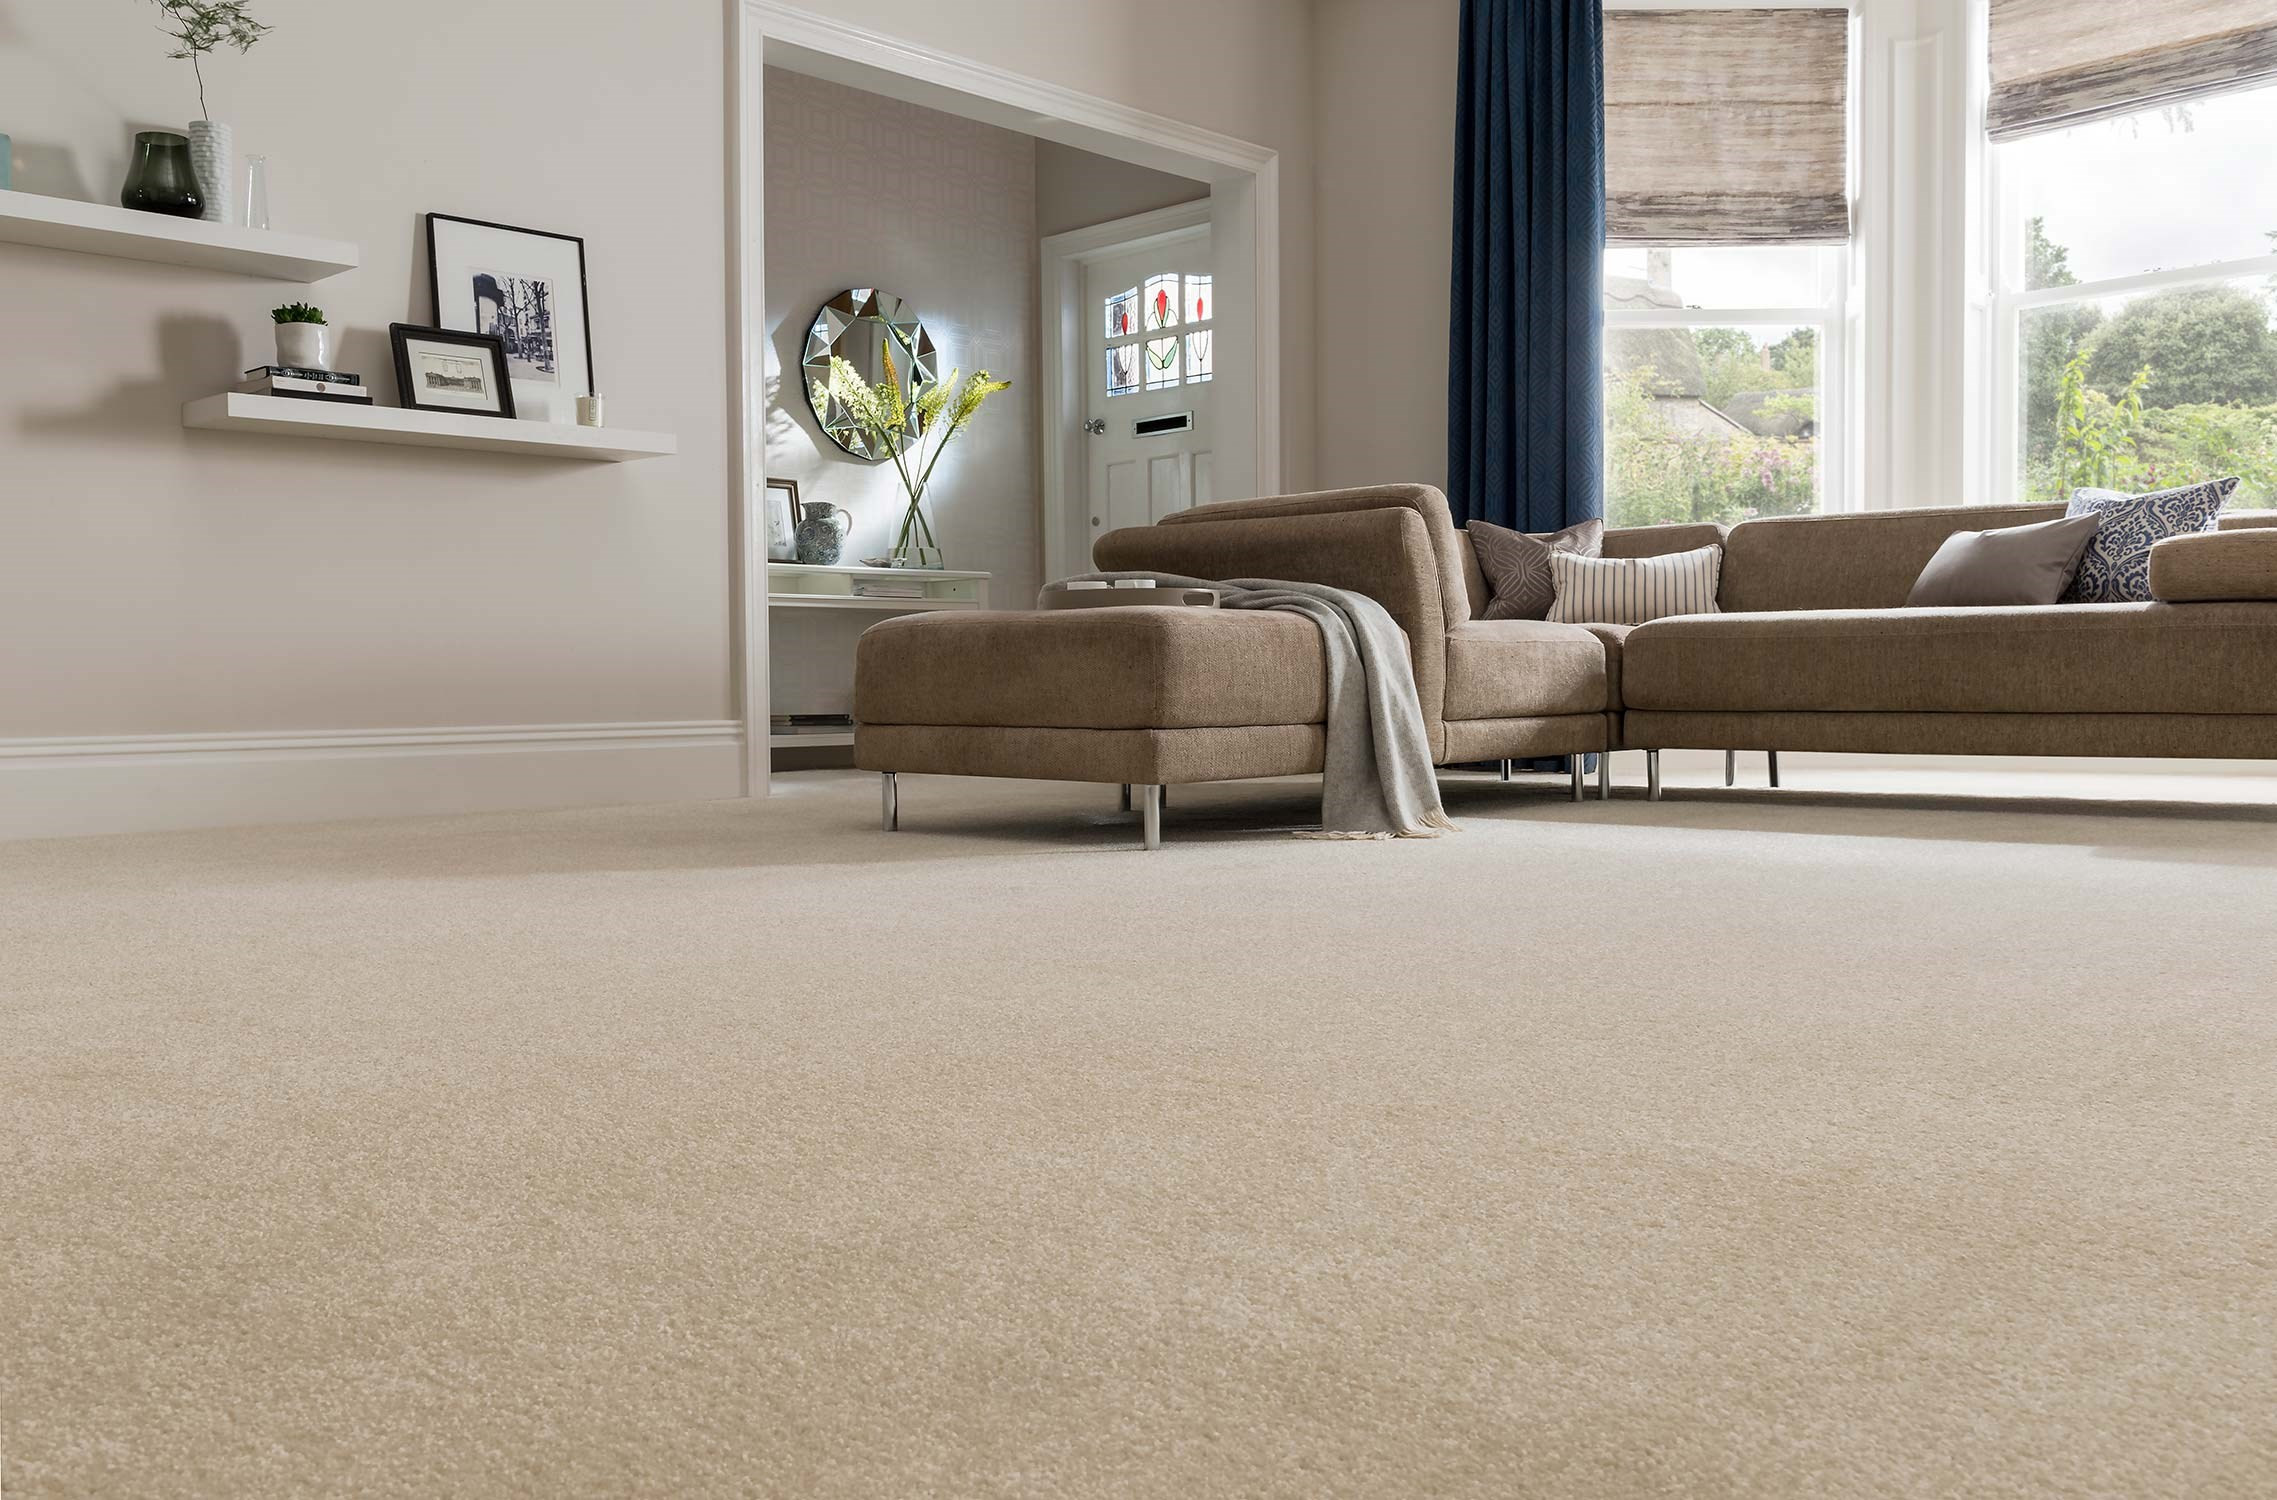 Living Room Carpet Colors
 Carpet Utah Great Price & Quality Great Carpet Starts